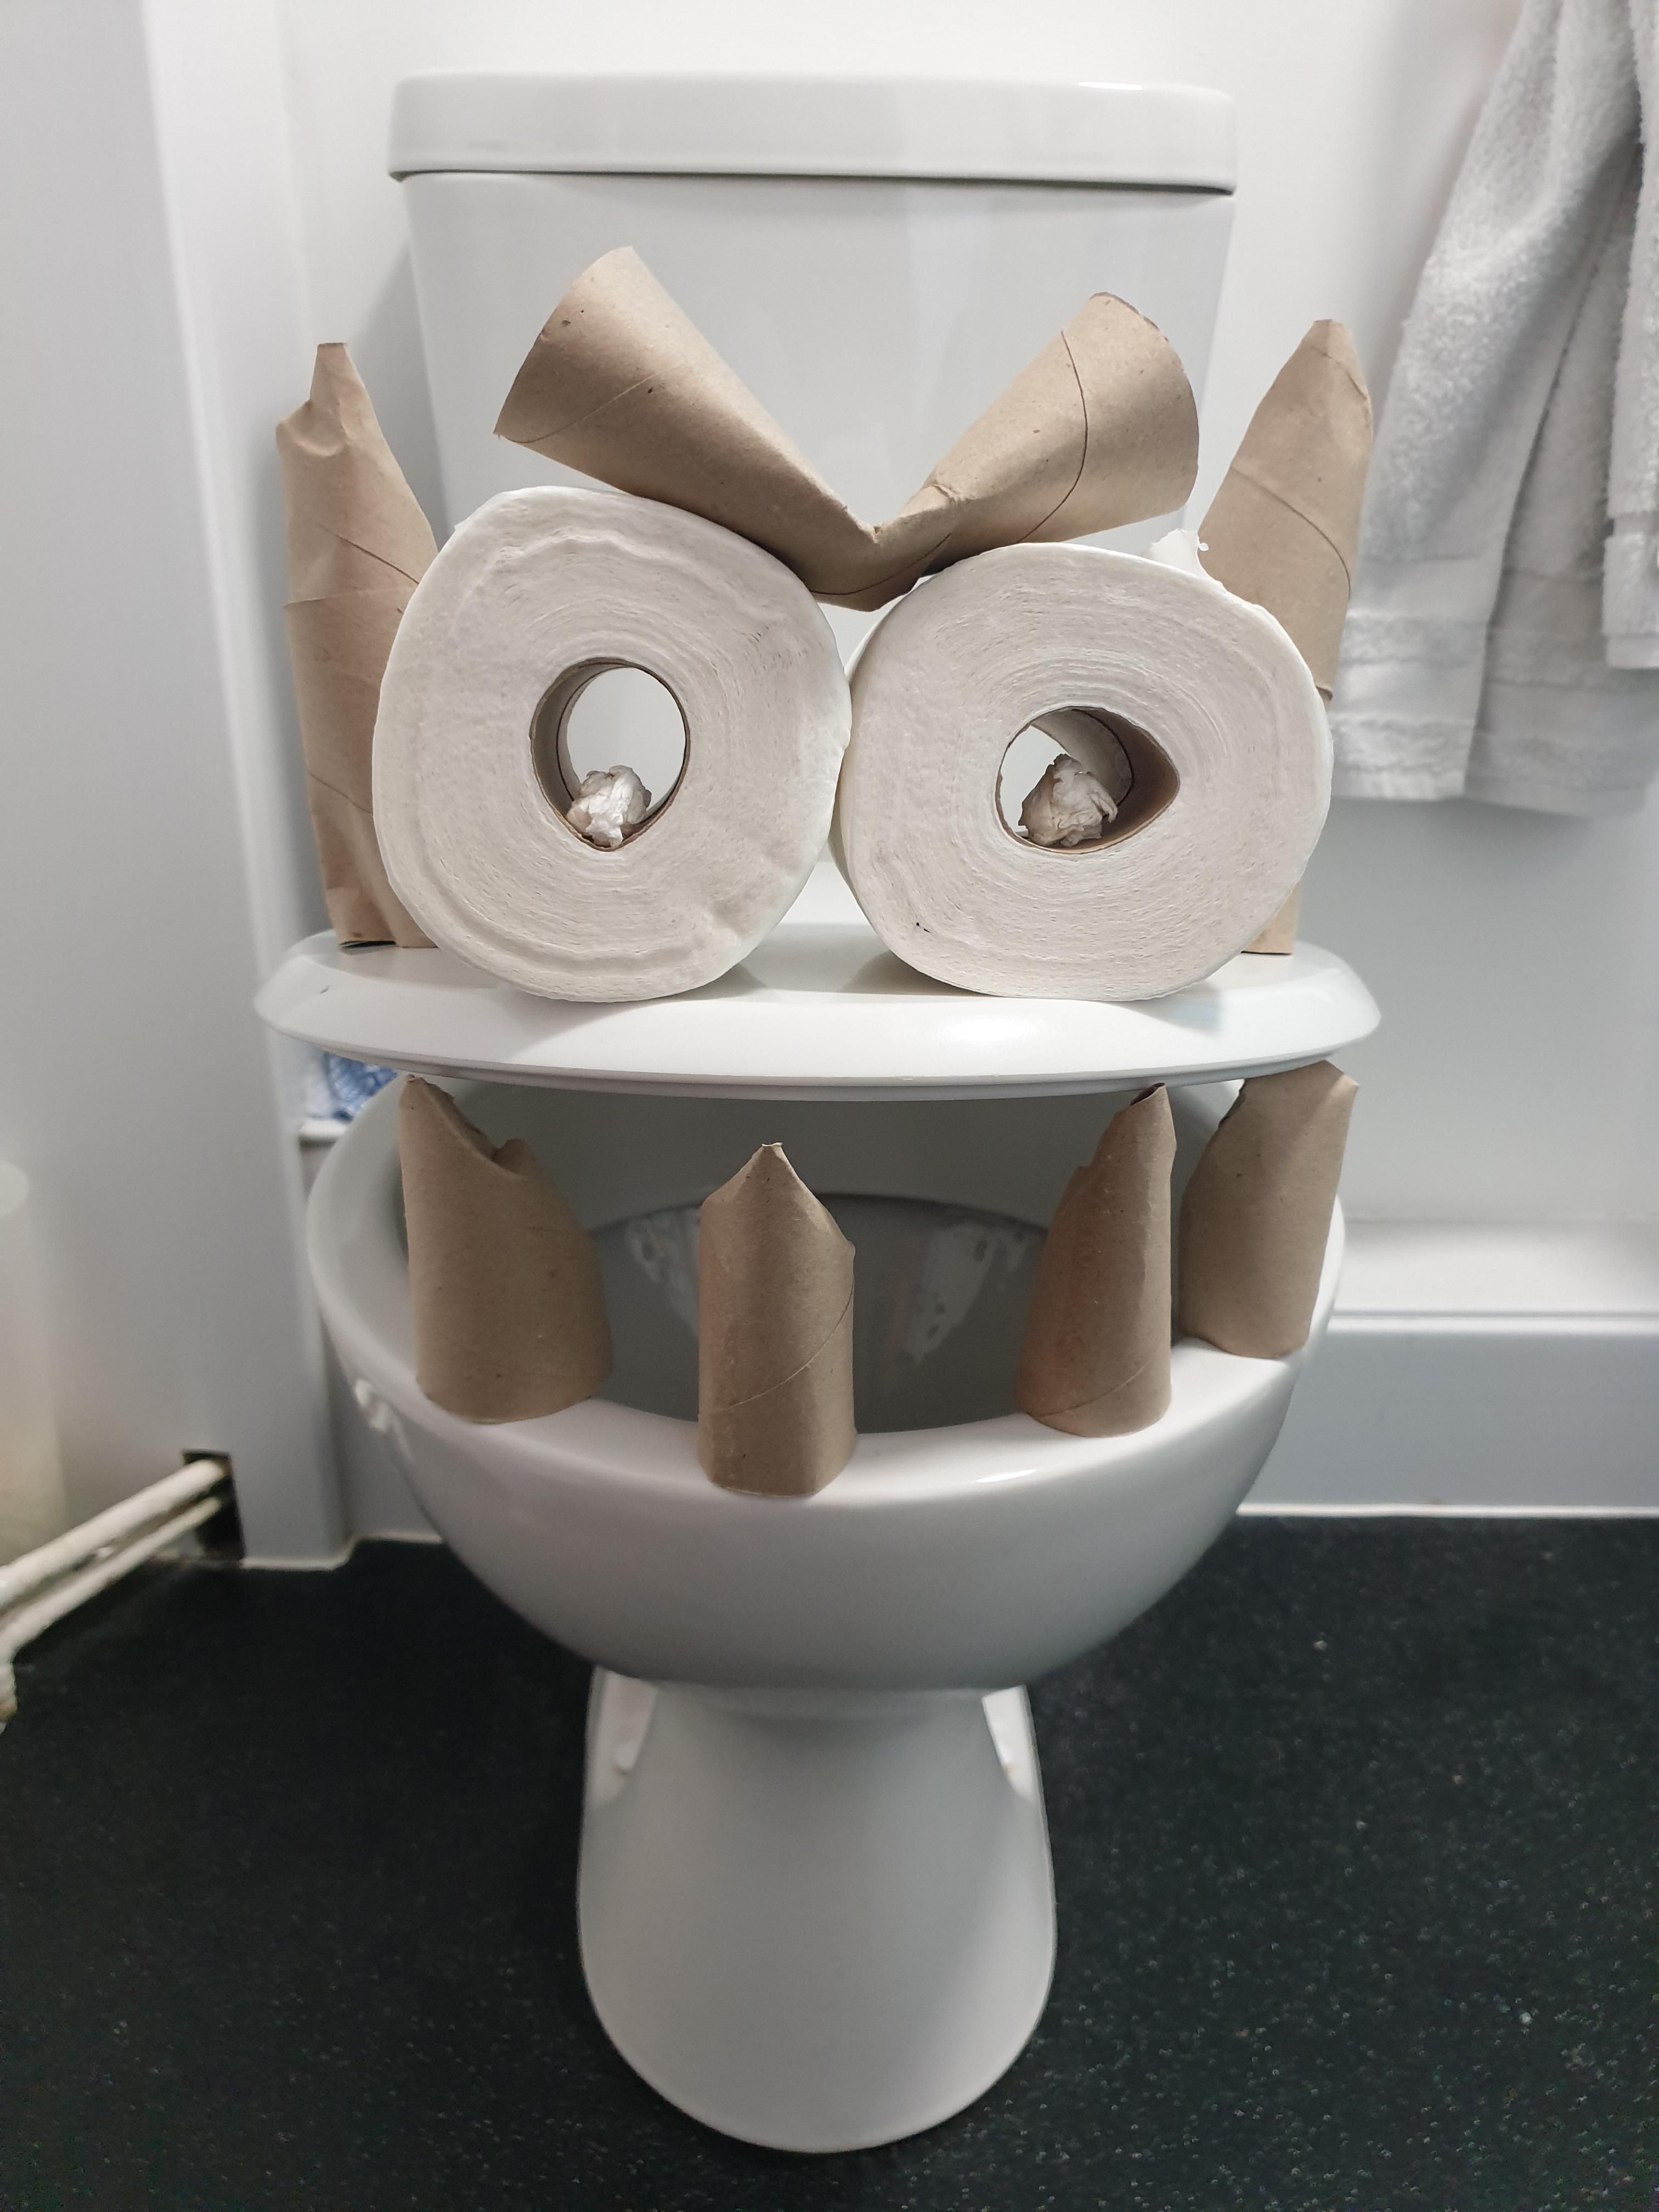 Got bored made a toilet monster.